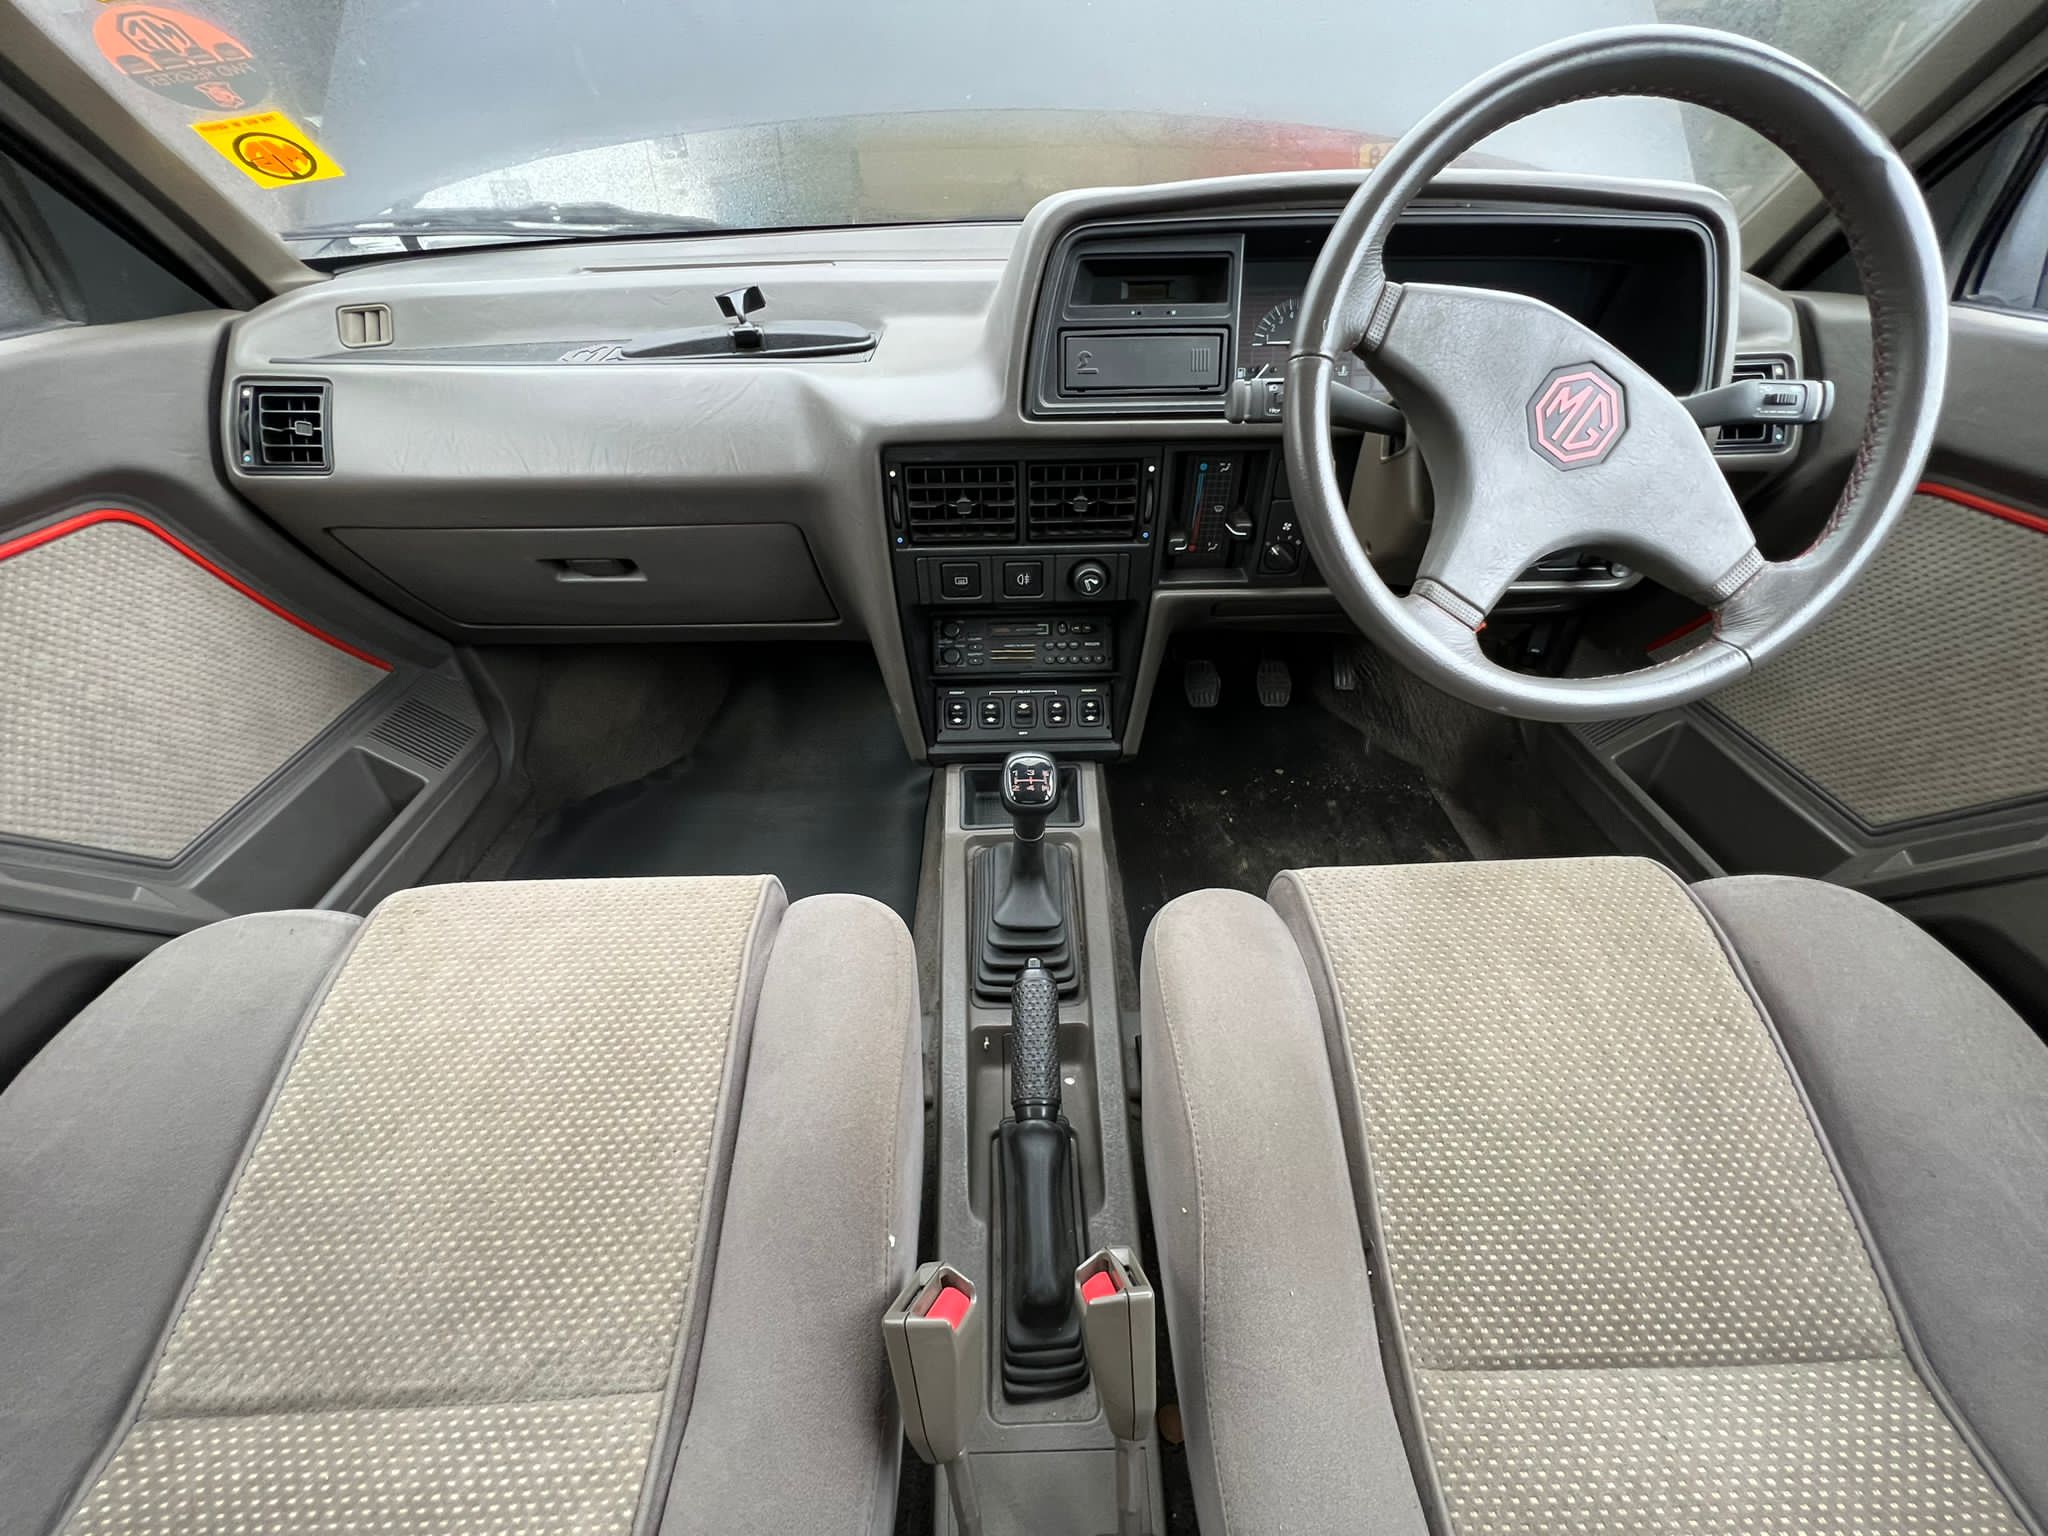 MG Montego Turbo 1988 - Image 14 of 14